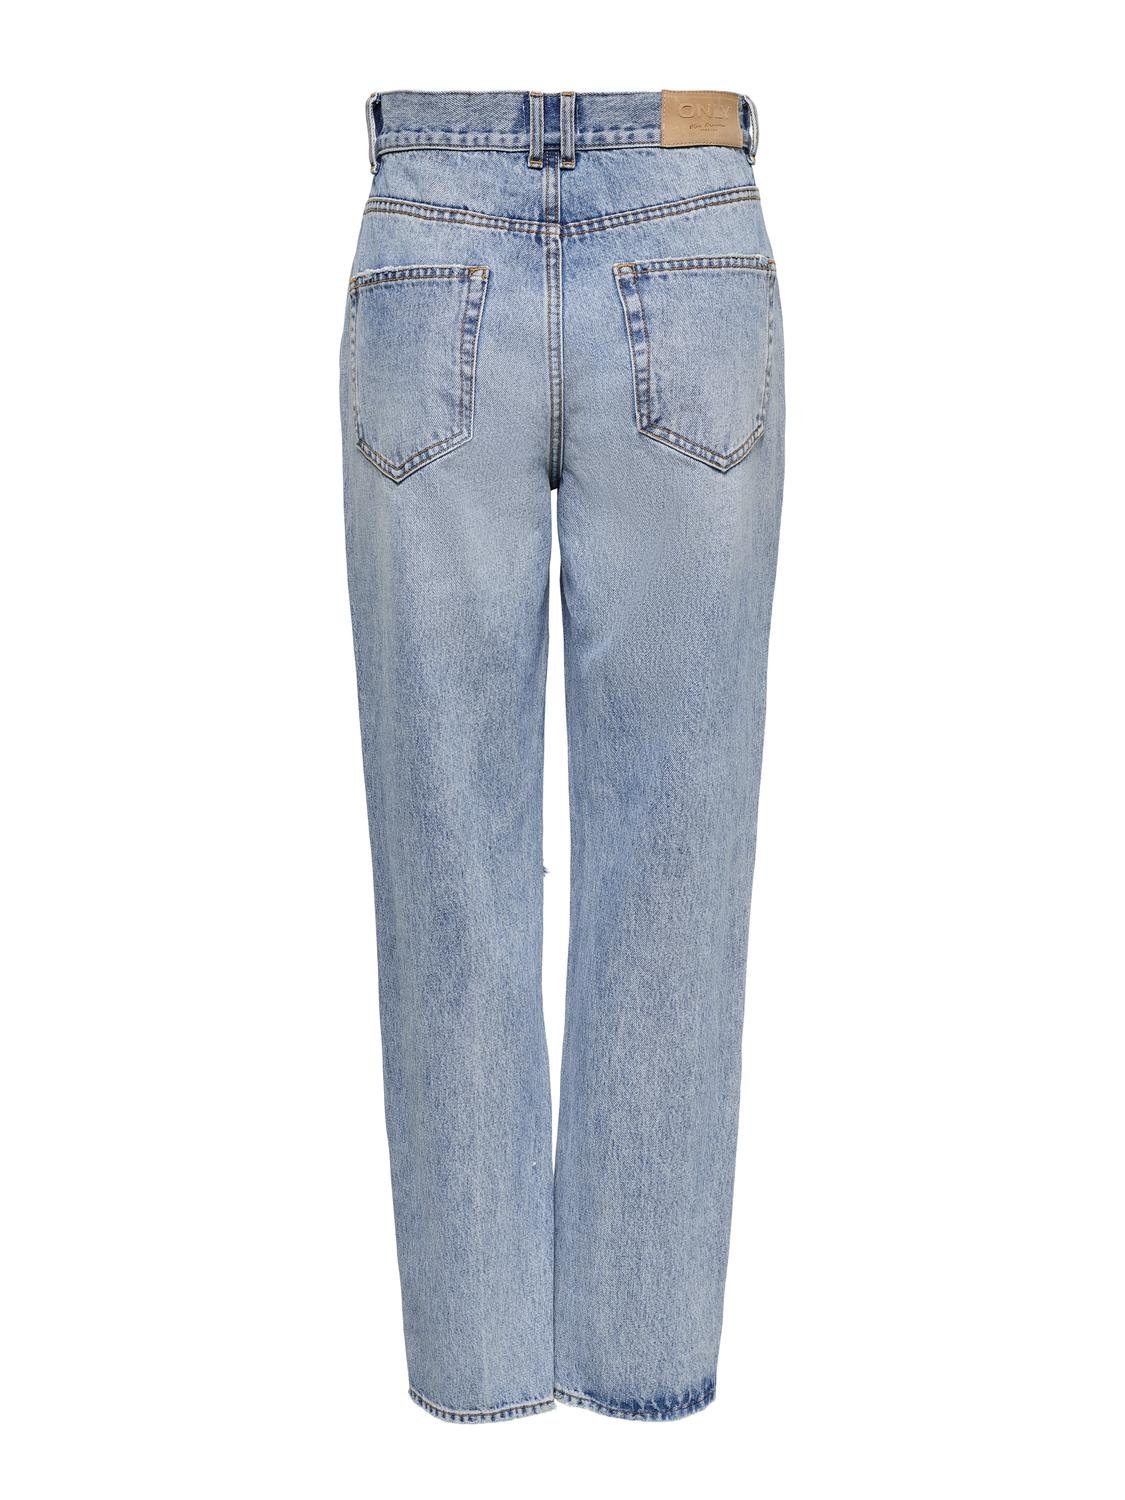 ONLY Gerade geschnitten Hohe Taille Offener Saum Jeans -Medium Blue Denim - 15250328